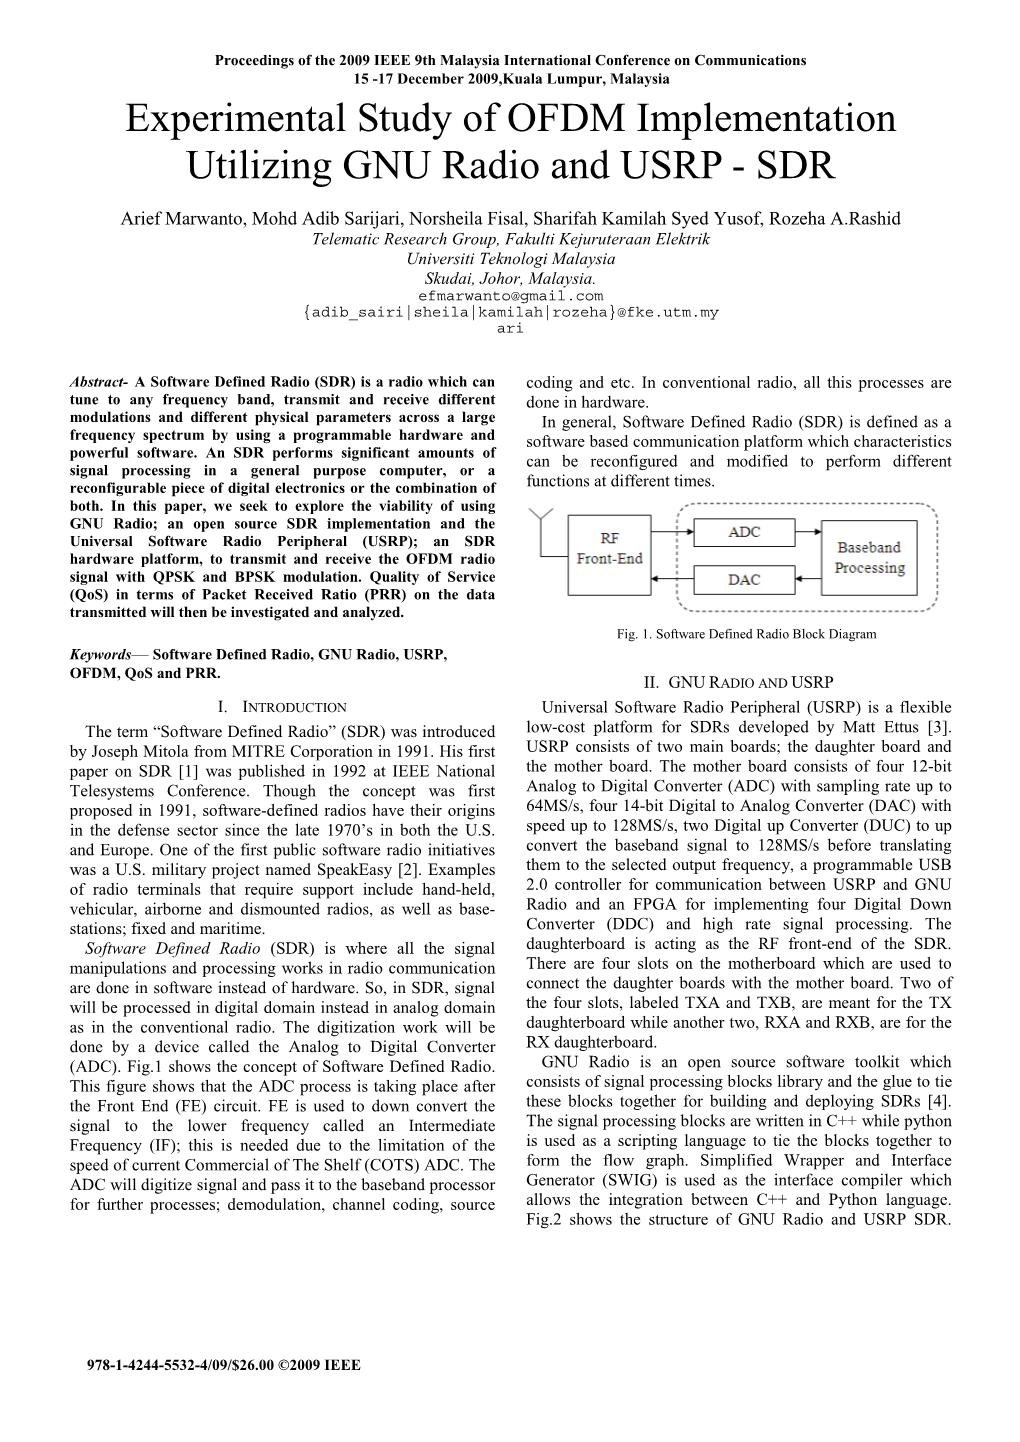 Experimental Study of OFDM Implementation Utilizing GNU Radio and USRP - SDR